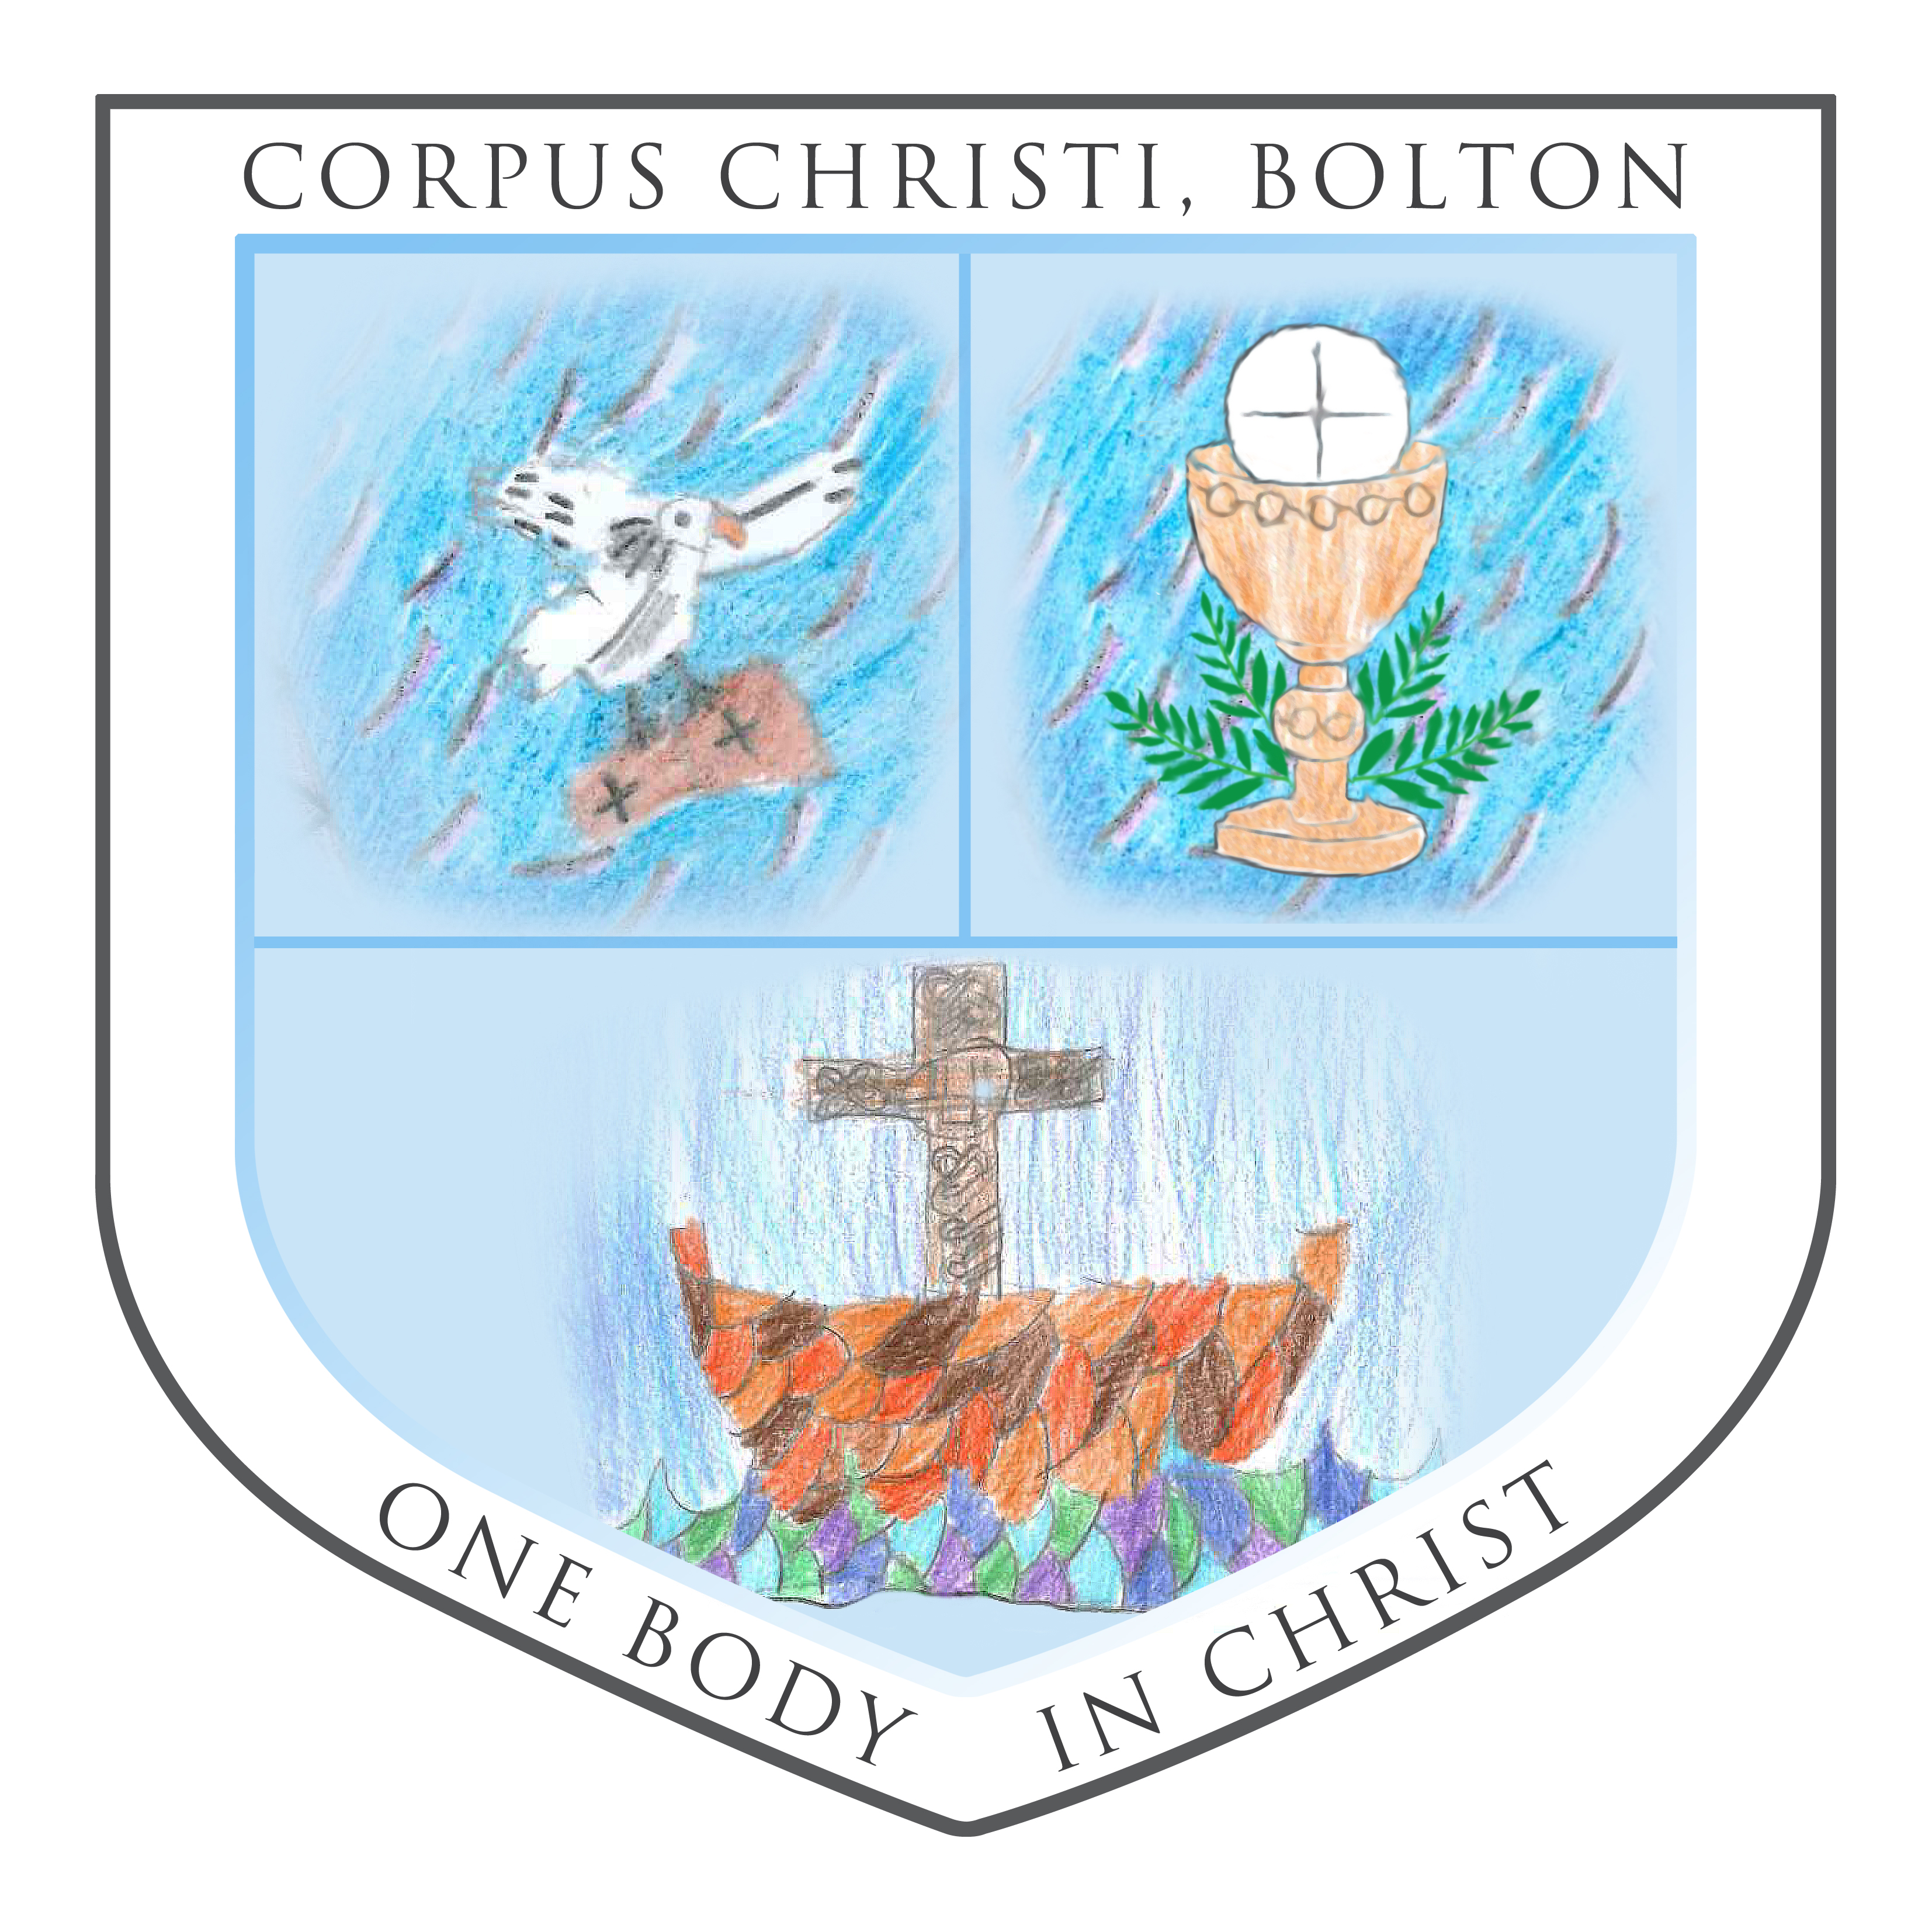 Corpus Christi, Bolton